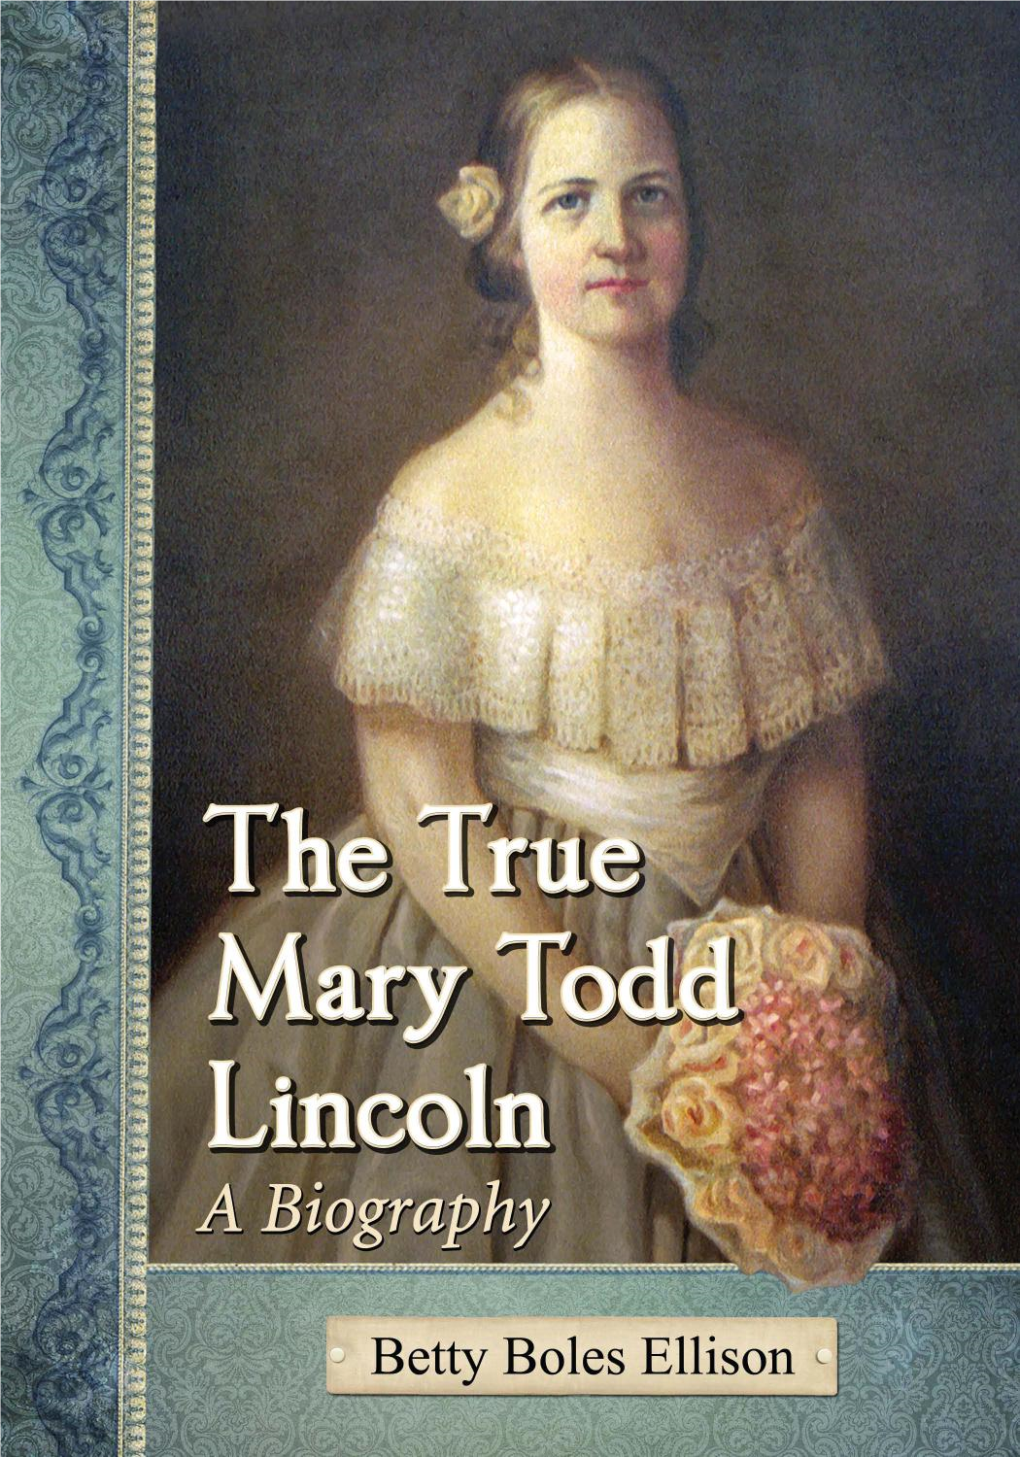 The True Mary Todd Lincoln ALSO by BETTY BOLES ELLISON